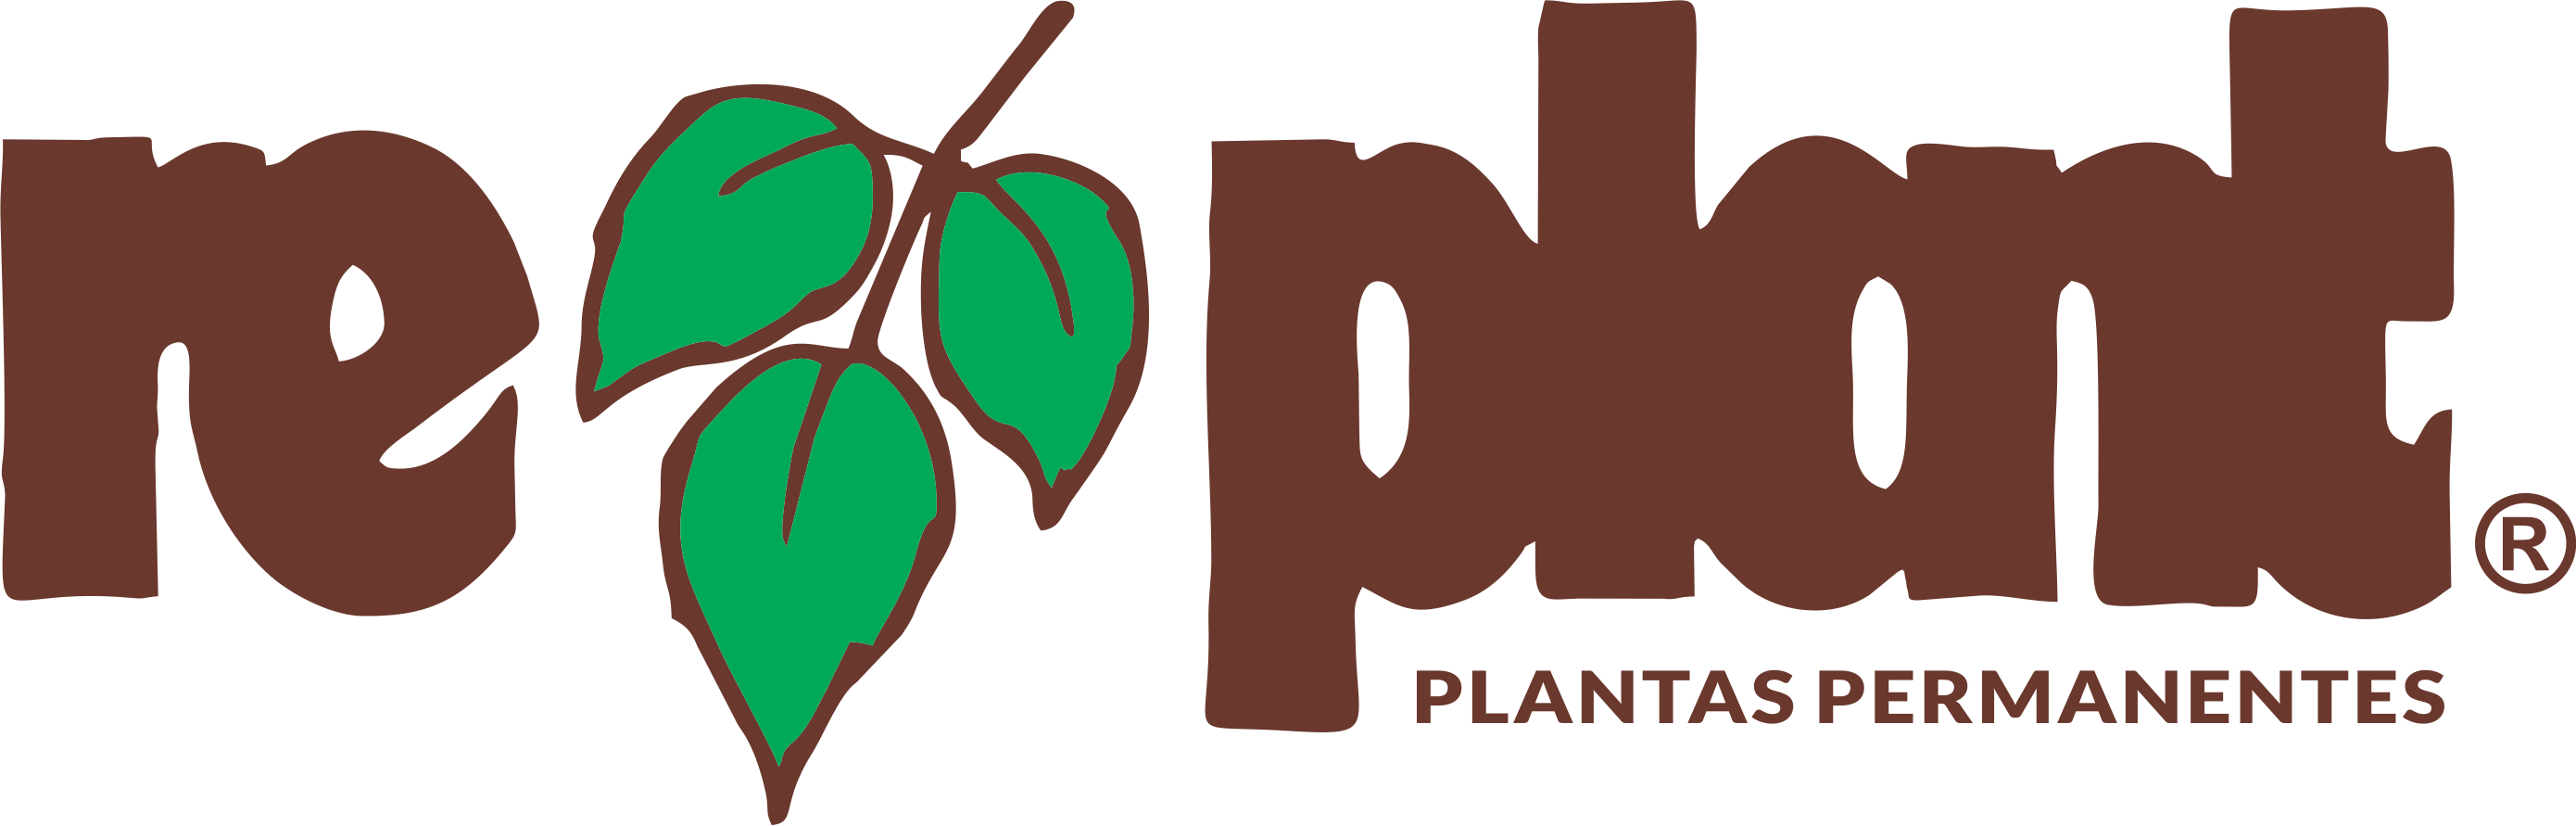 replant-plantas-permanentes